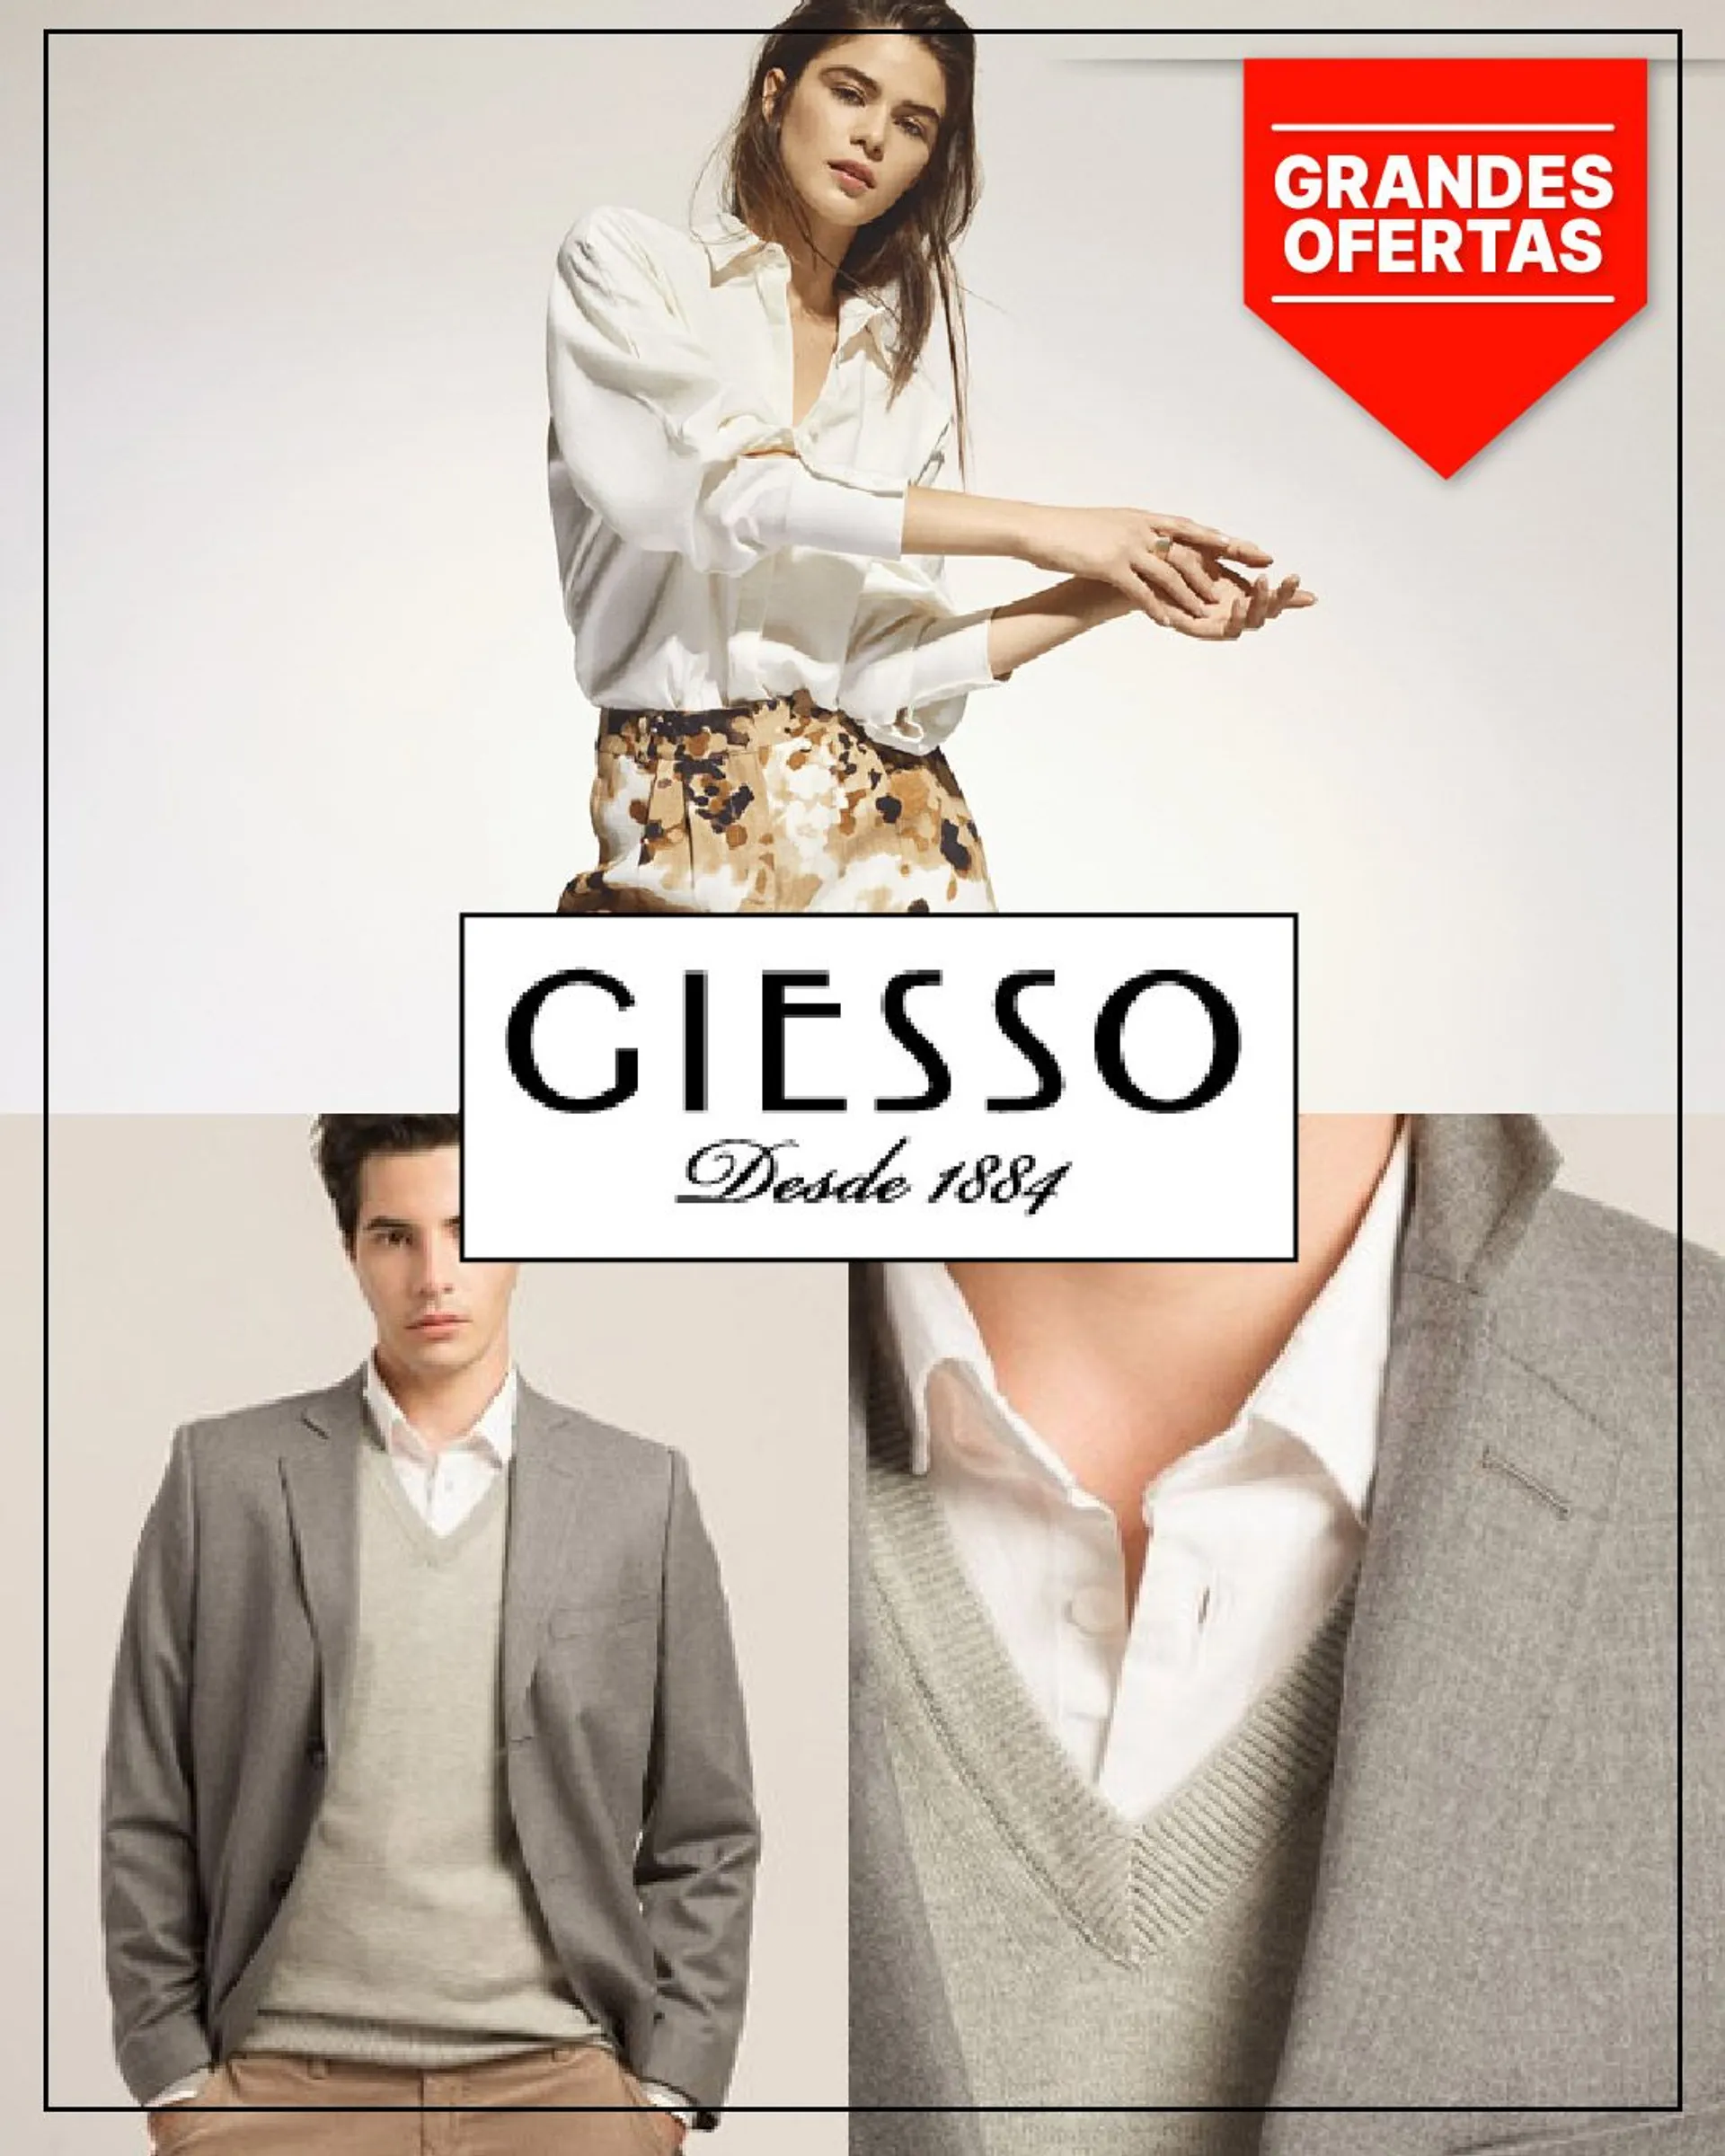 Ofertas de Giesso - Moda 27 de abril al 2 de mayo 2024 - Página 1 del catálogo